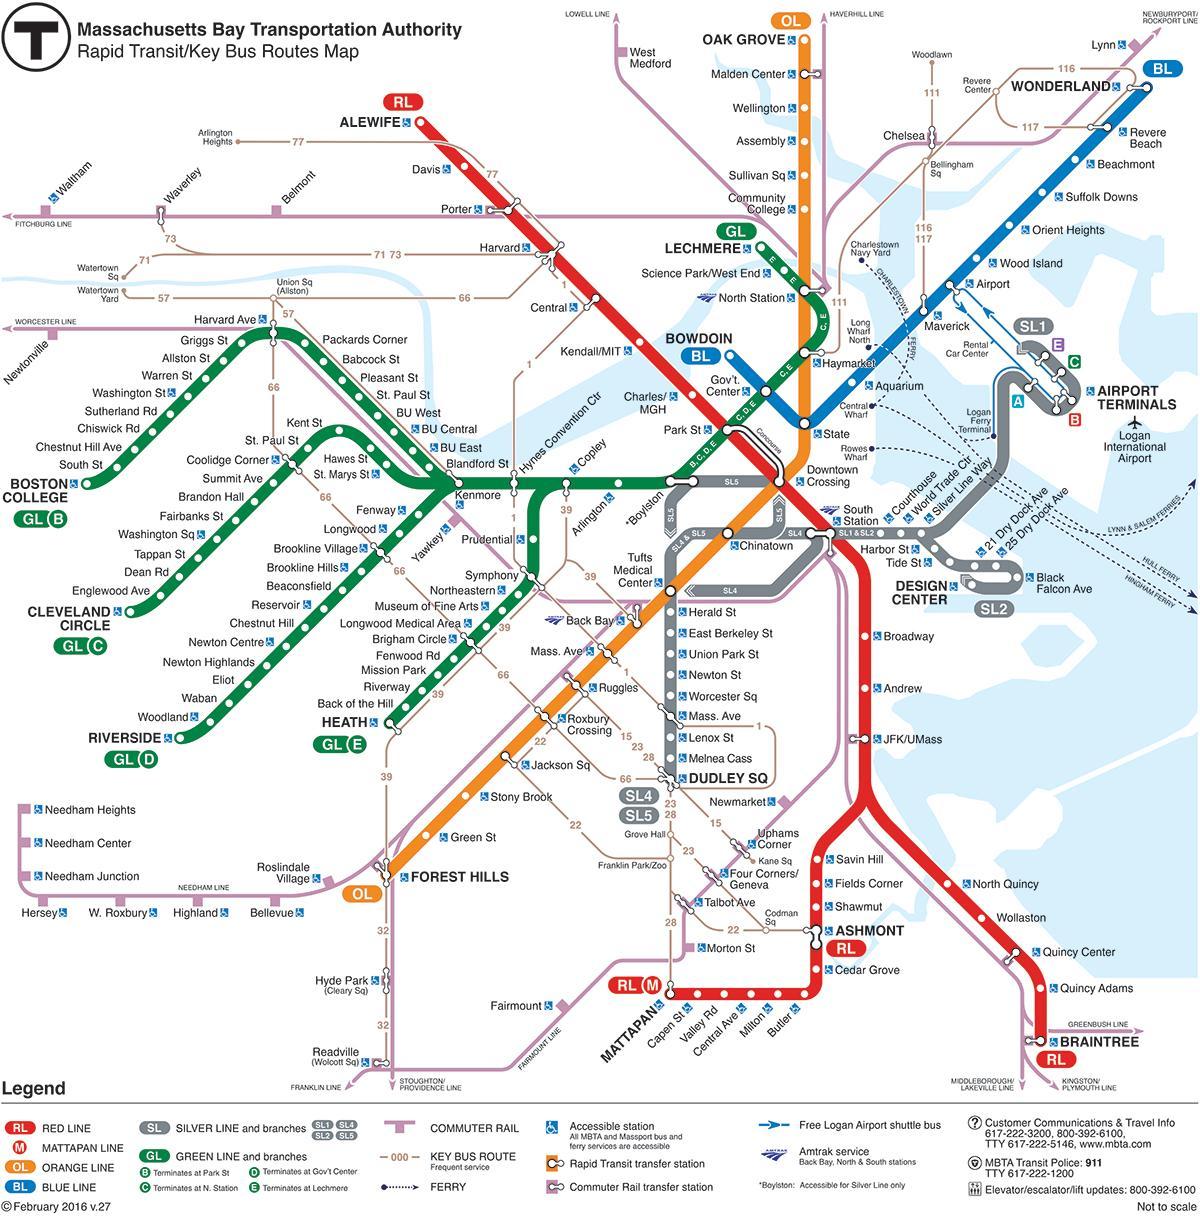 MBTA نقشہ سرخ لائن